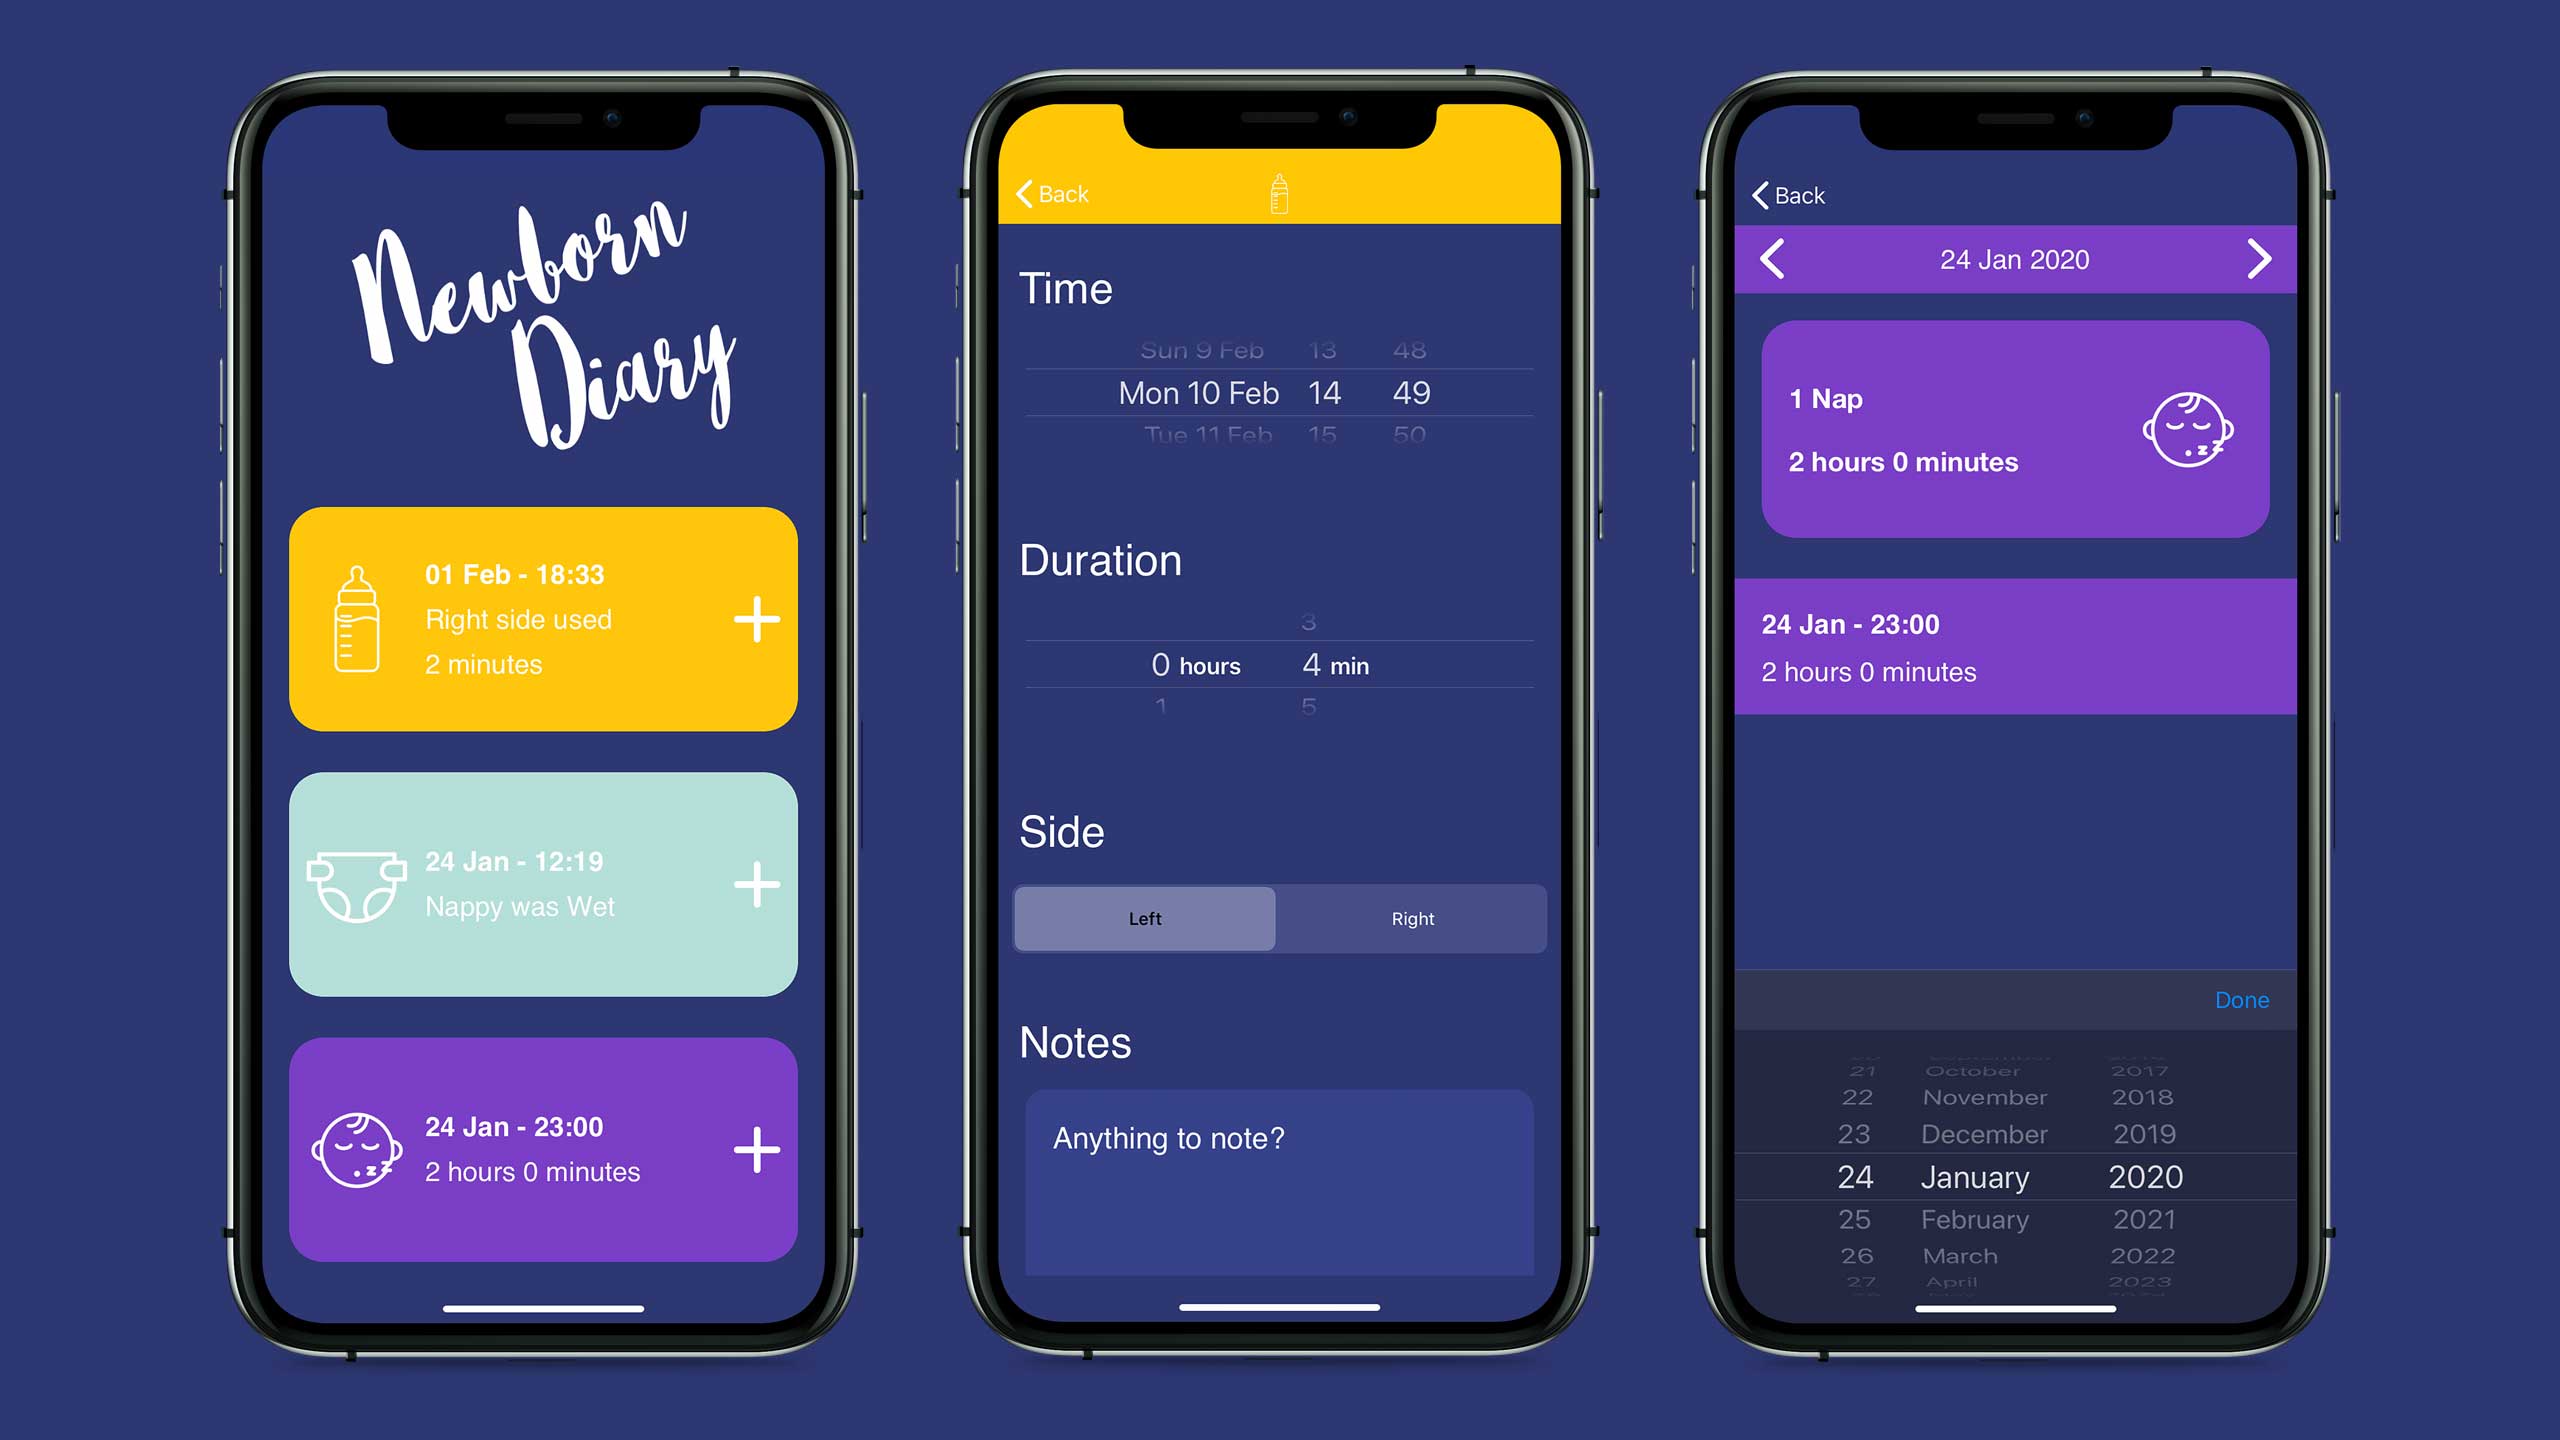 Phone Screens showing the Newborn Diary App